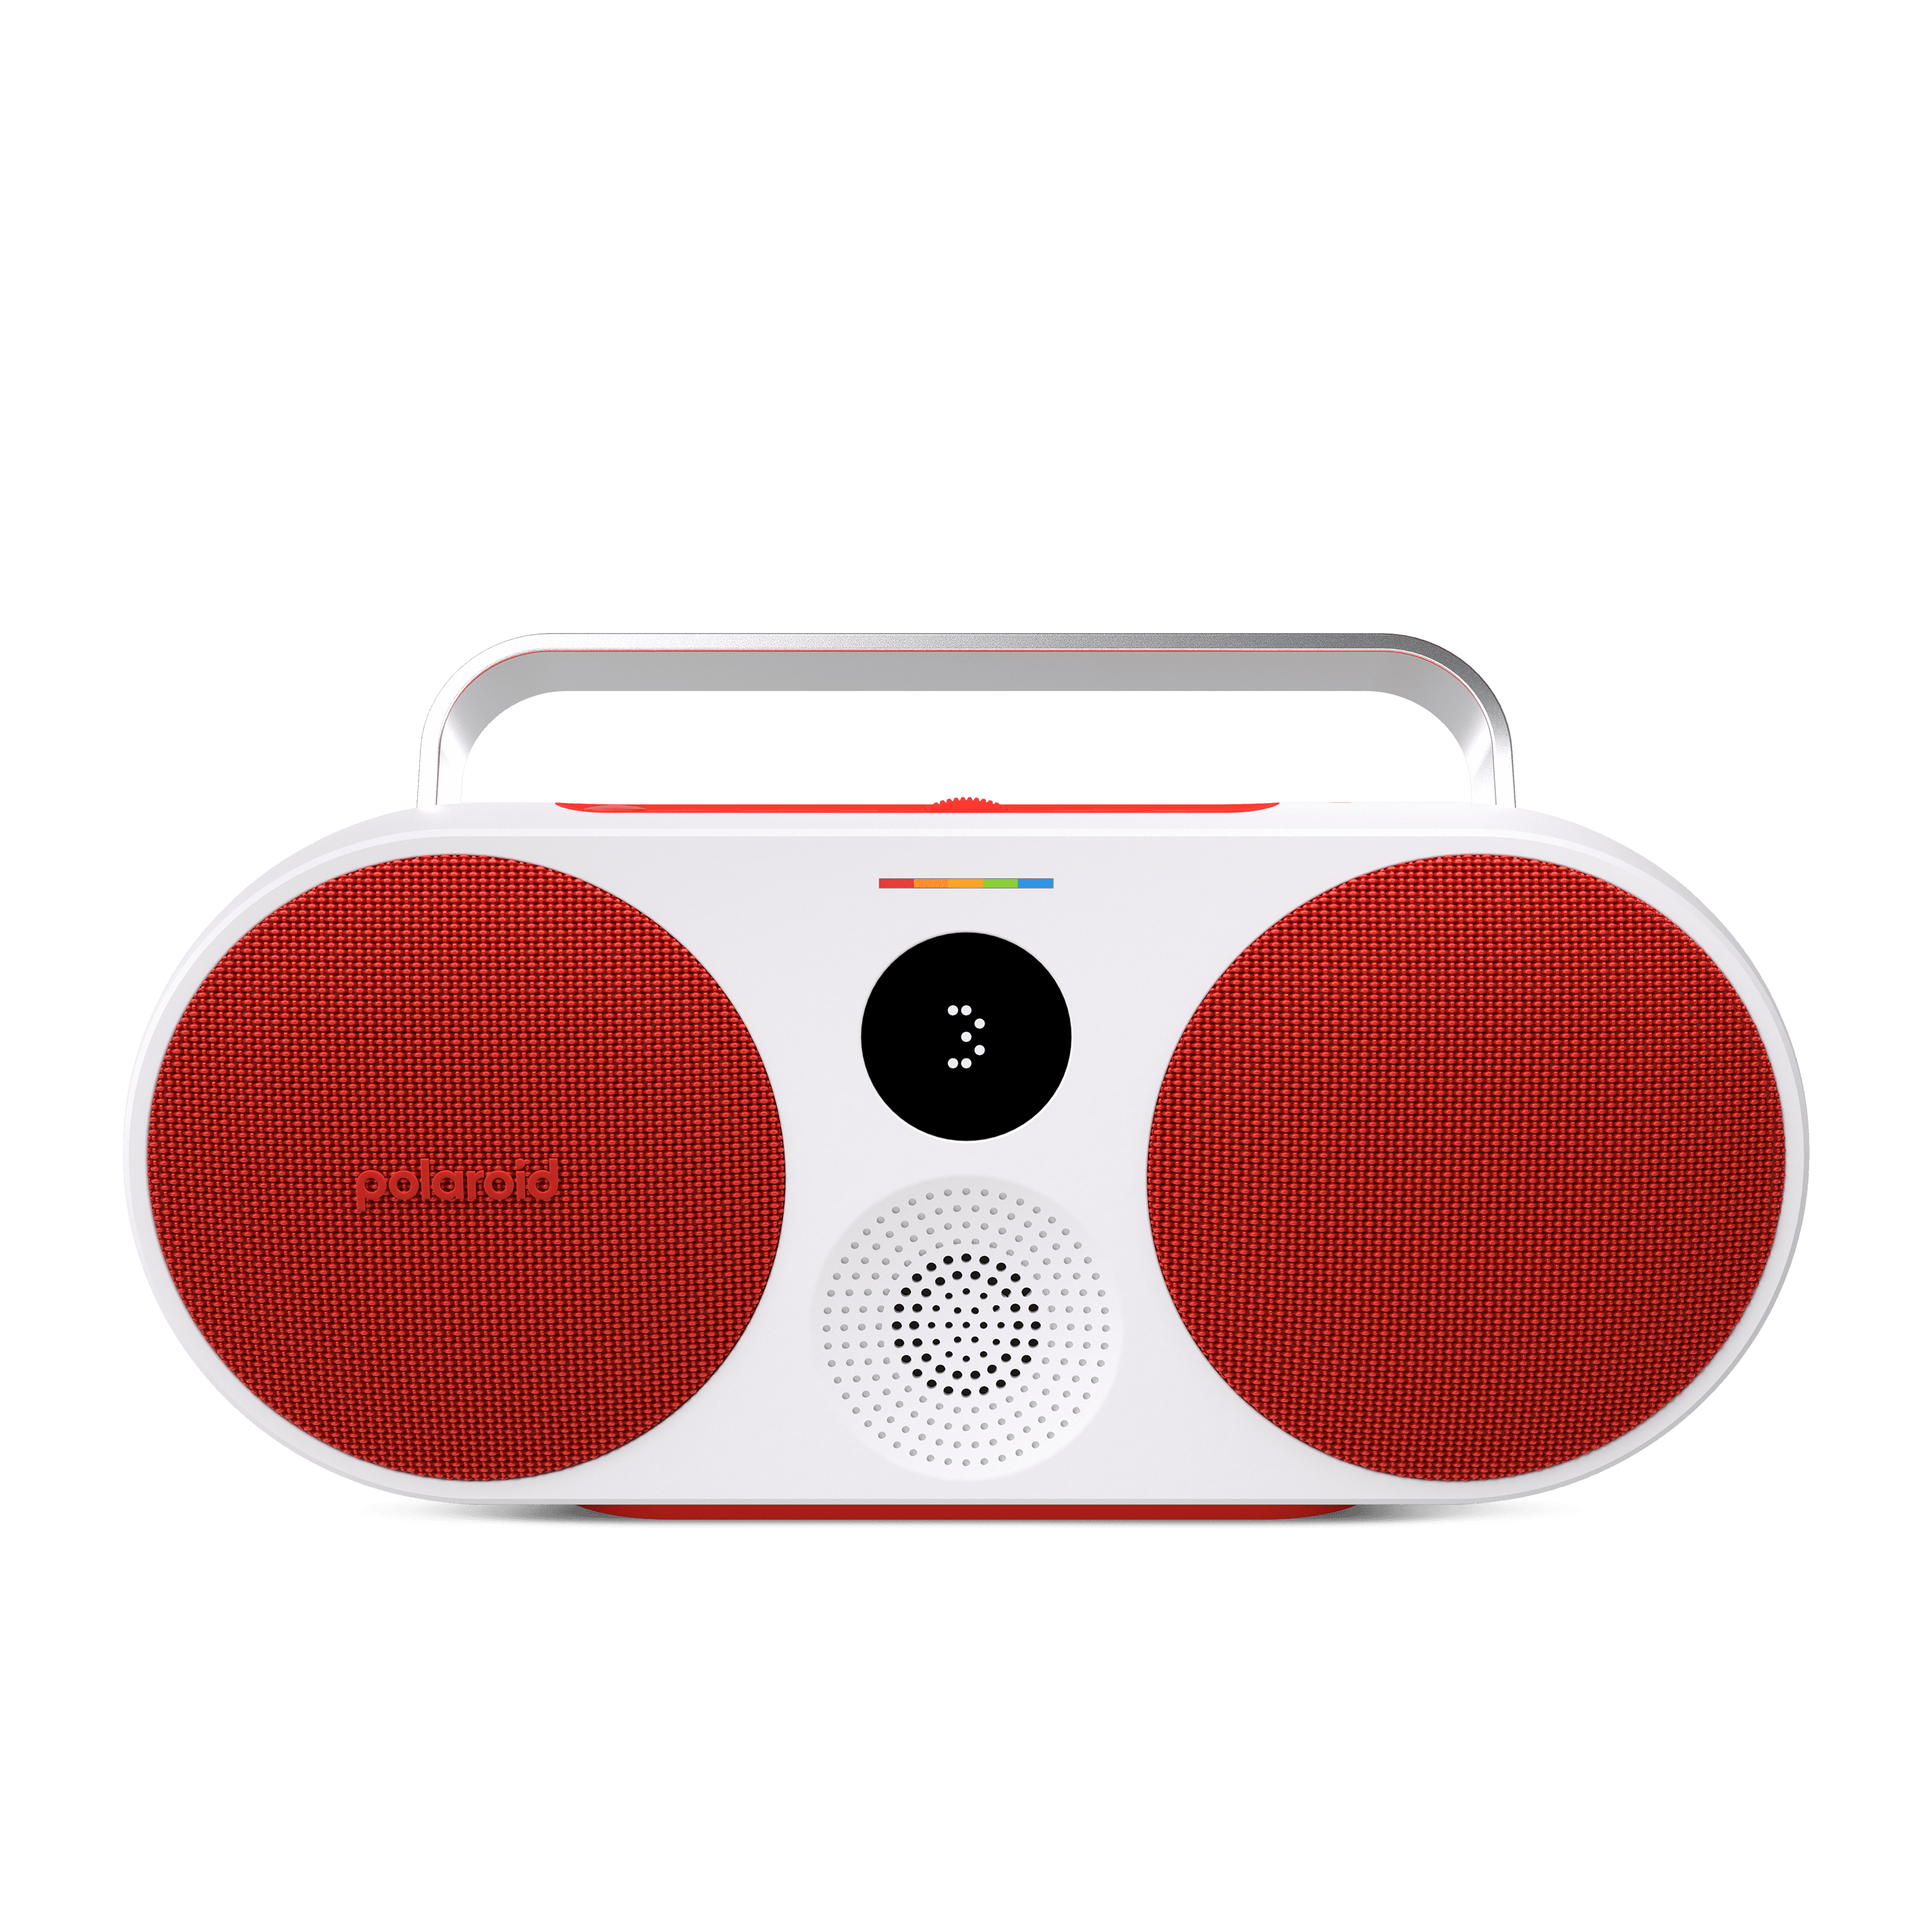 سبيكر بلوتوث محمول احمر وابيض بولارويد POLAROID P3 Music Player Wireless Portable Speaker